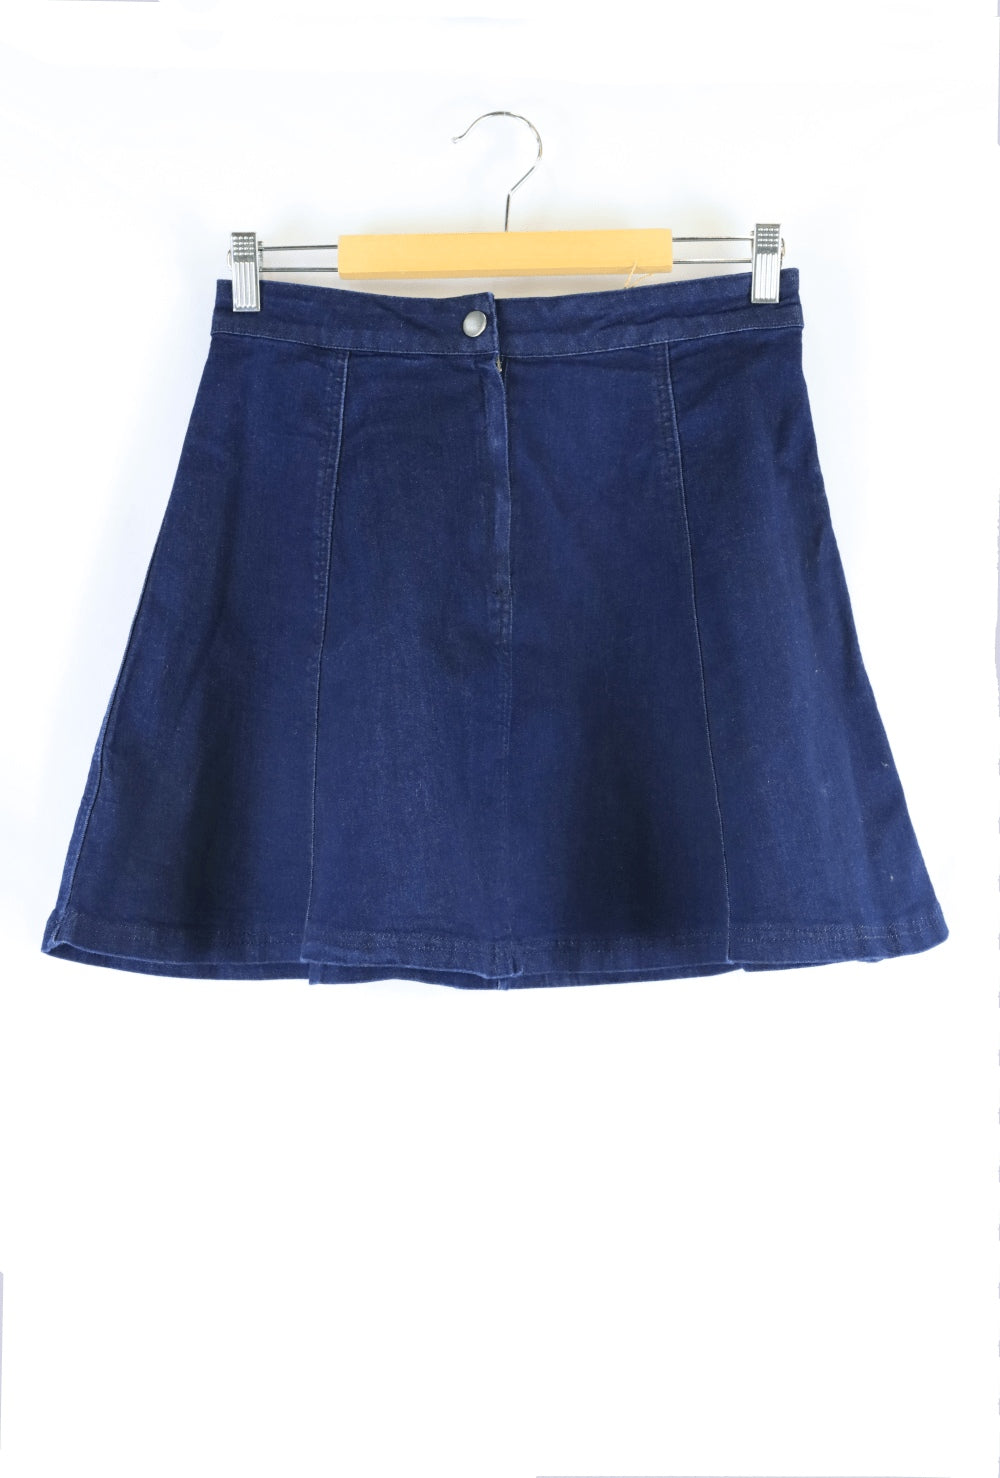 Dangerfield Blue Denim Skirt 10